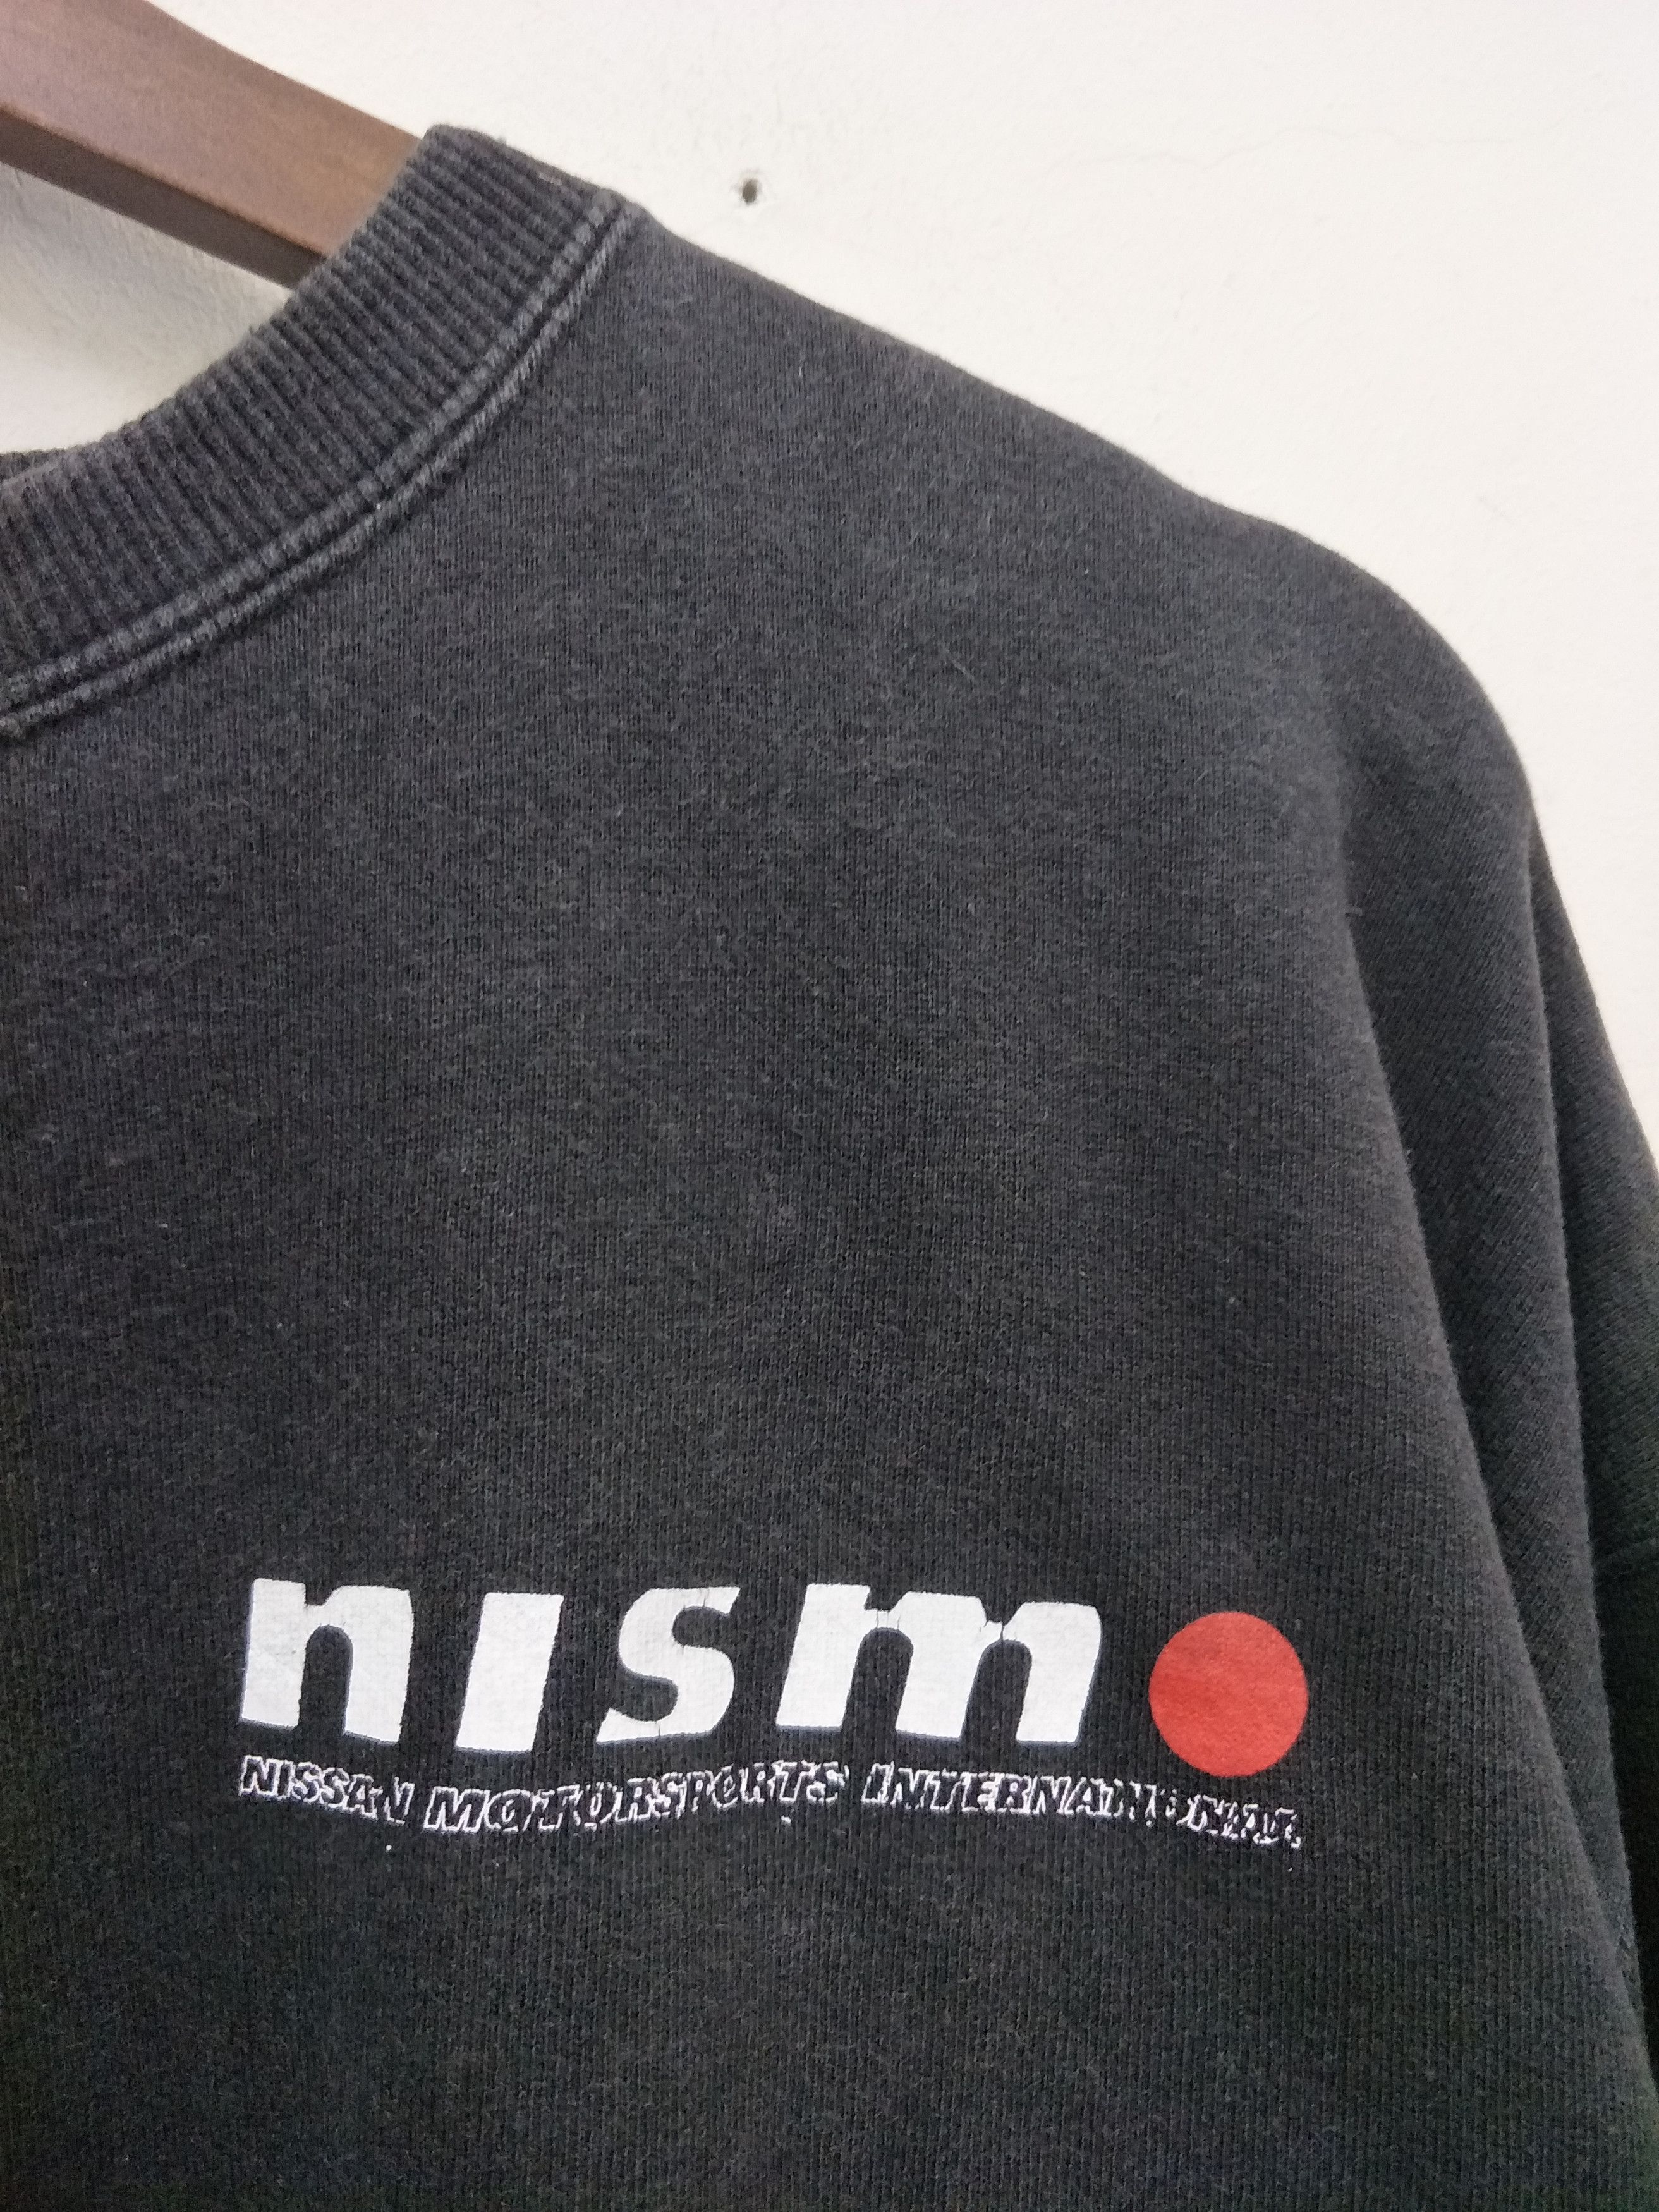 Japanese Brand - Nismo Racing Team R390 GT-1 Sweatshirt Official - 6